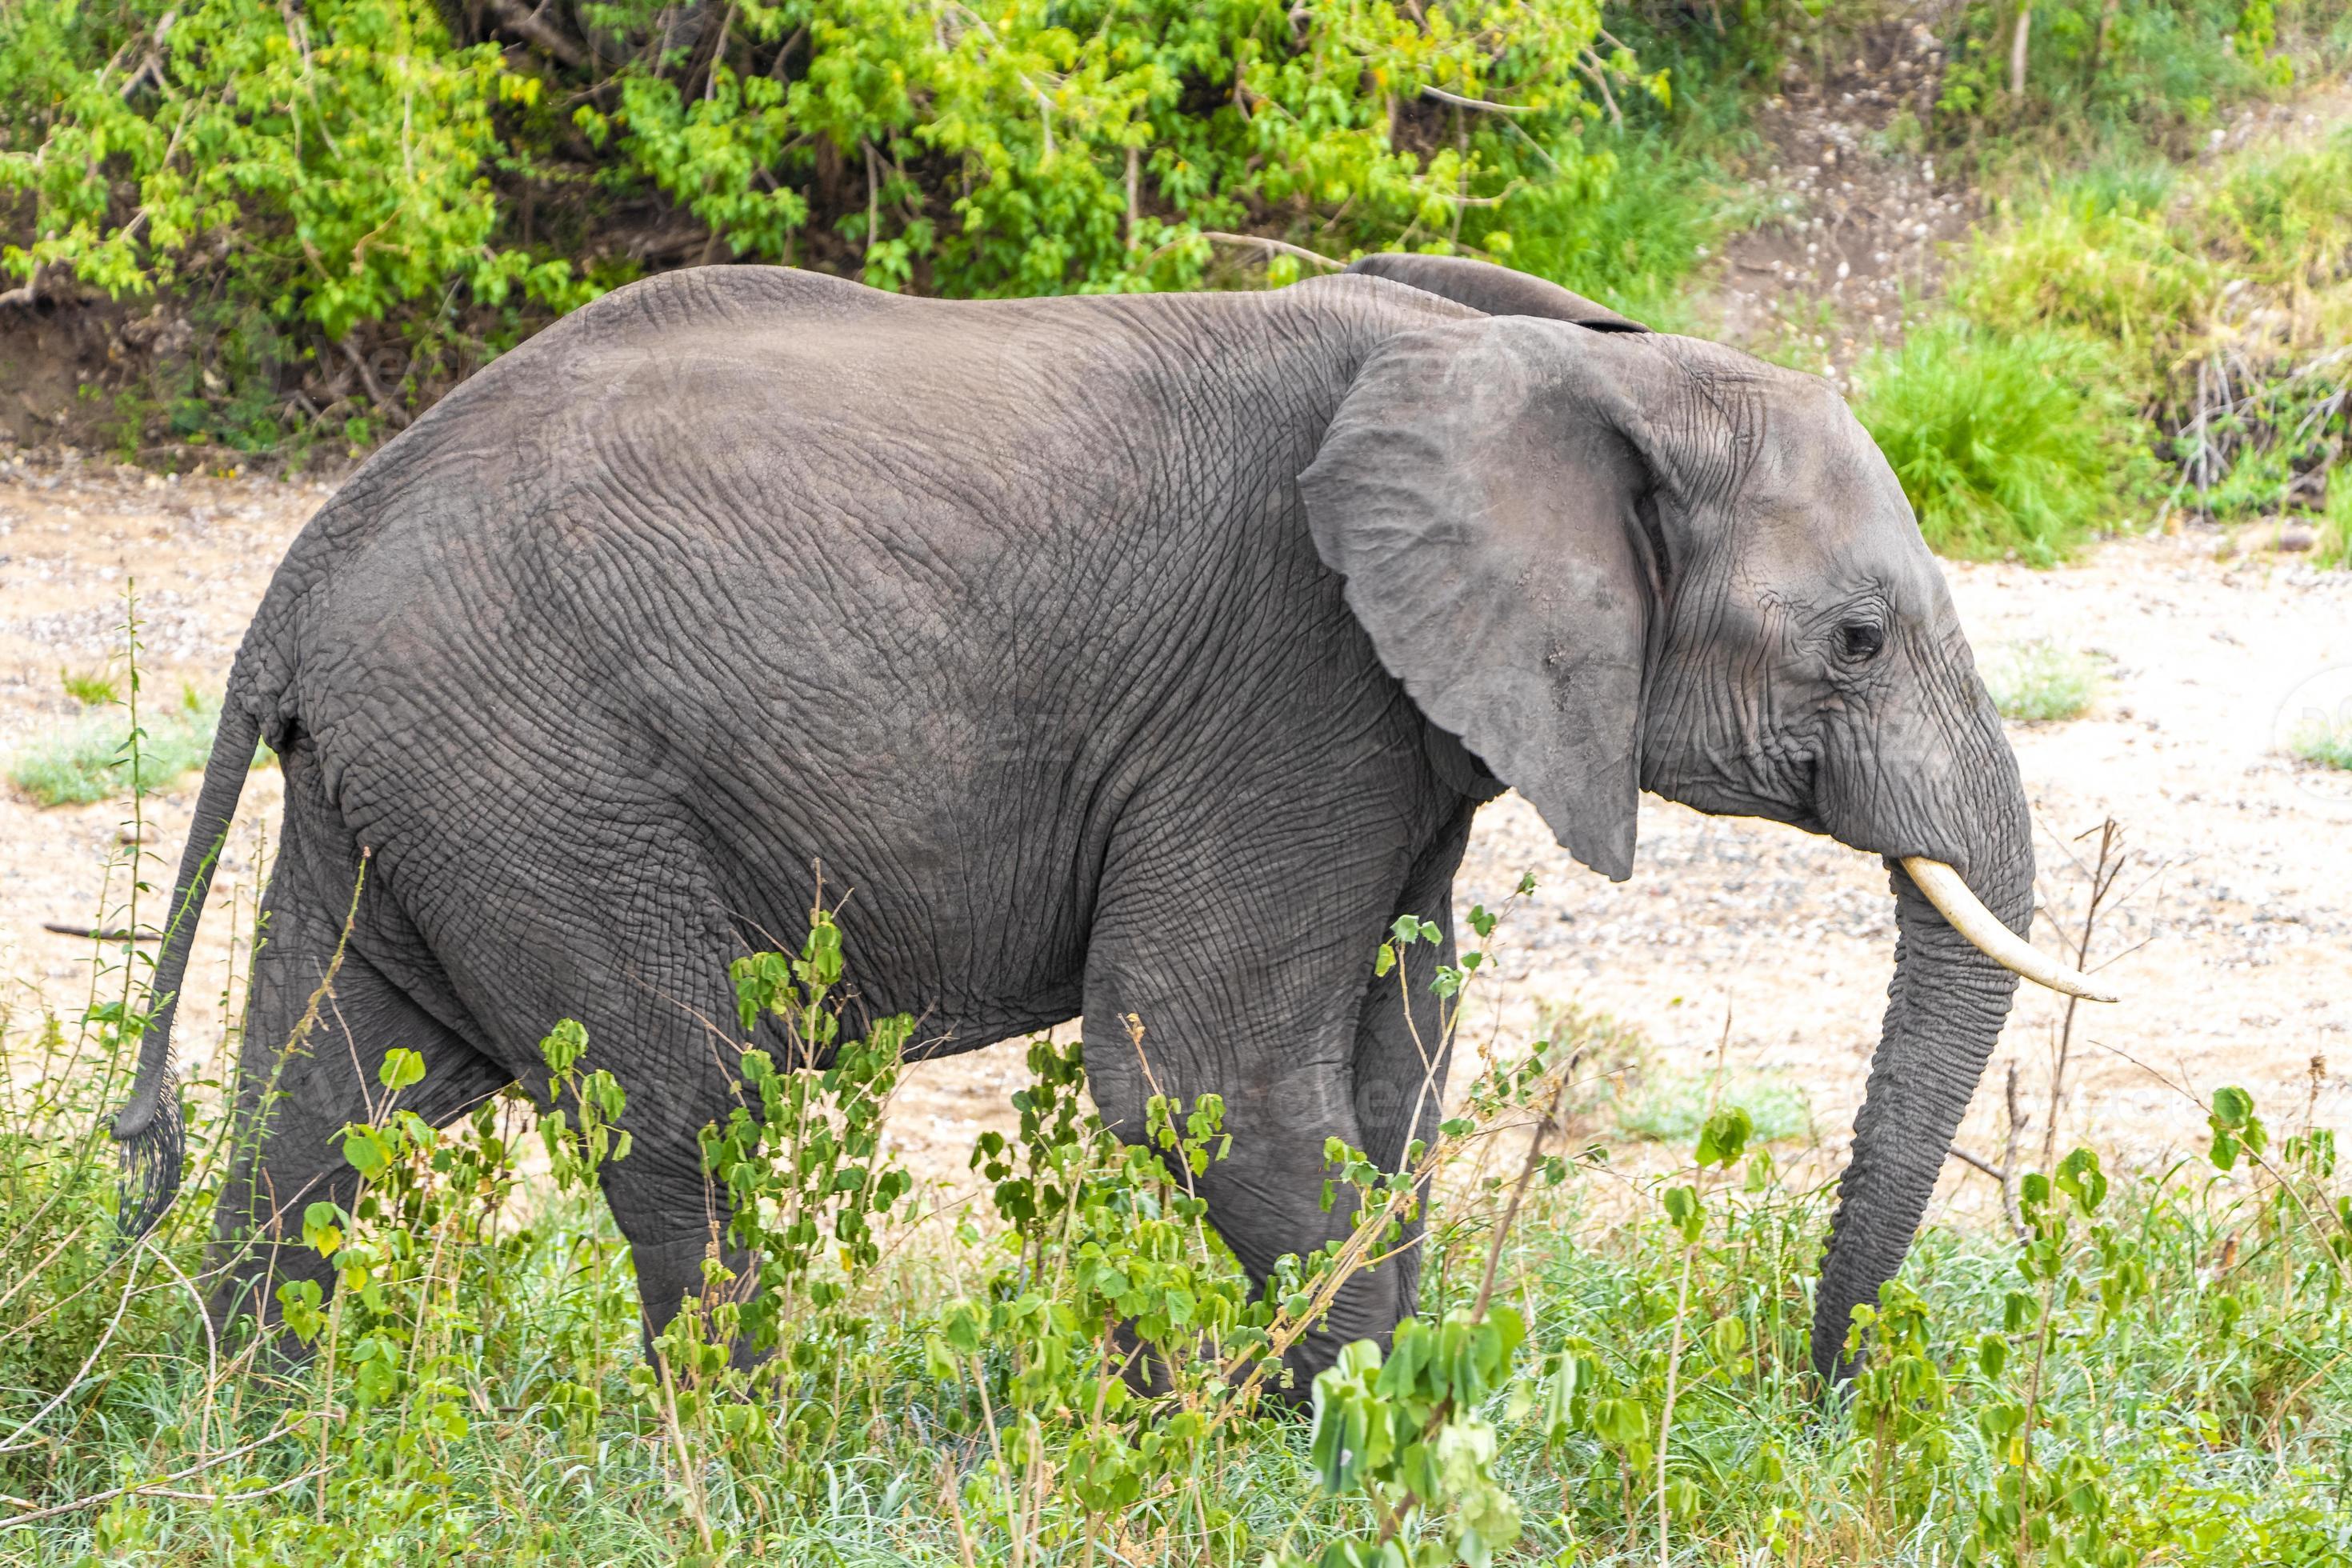 big five afrikaanse olifant kruger nationaal park safari zuid afrika. foto